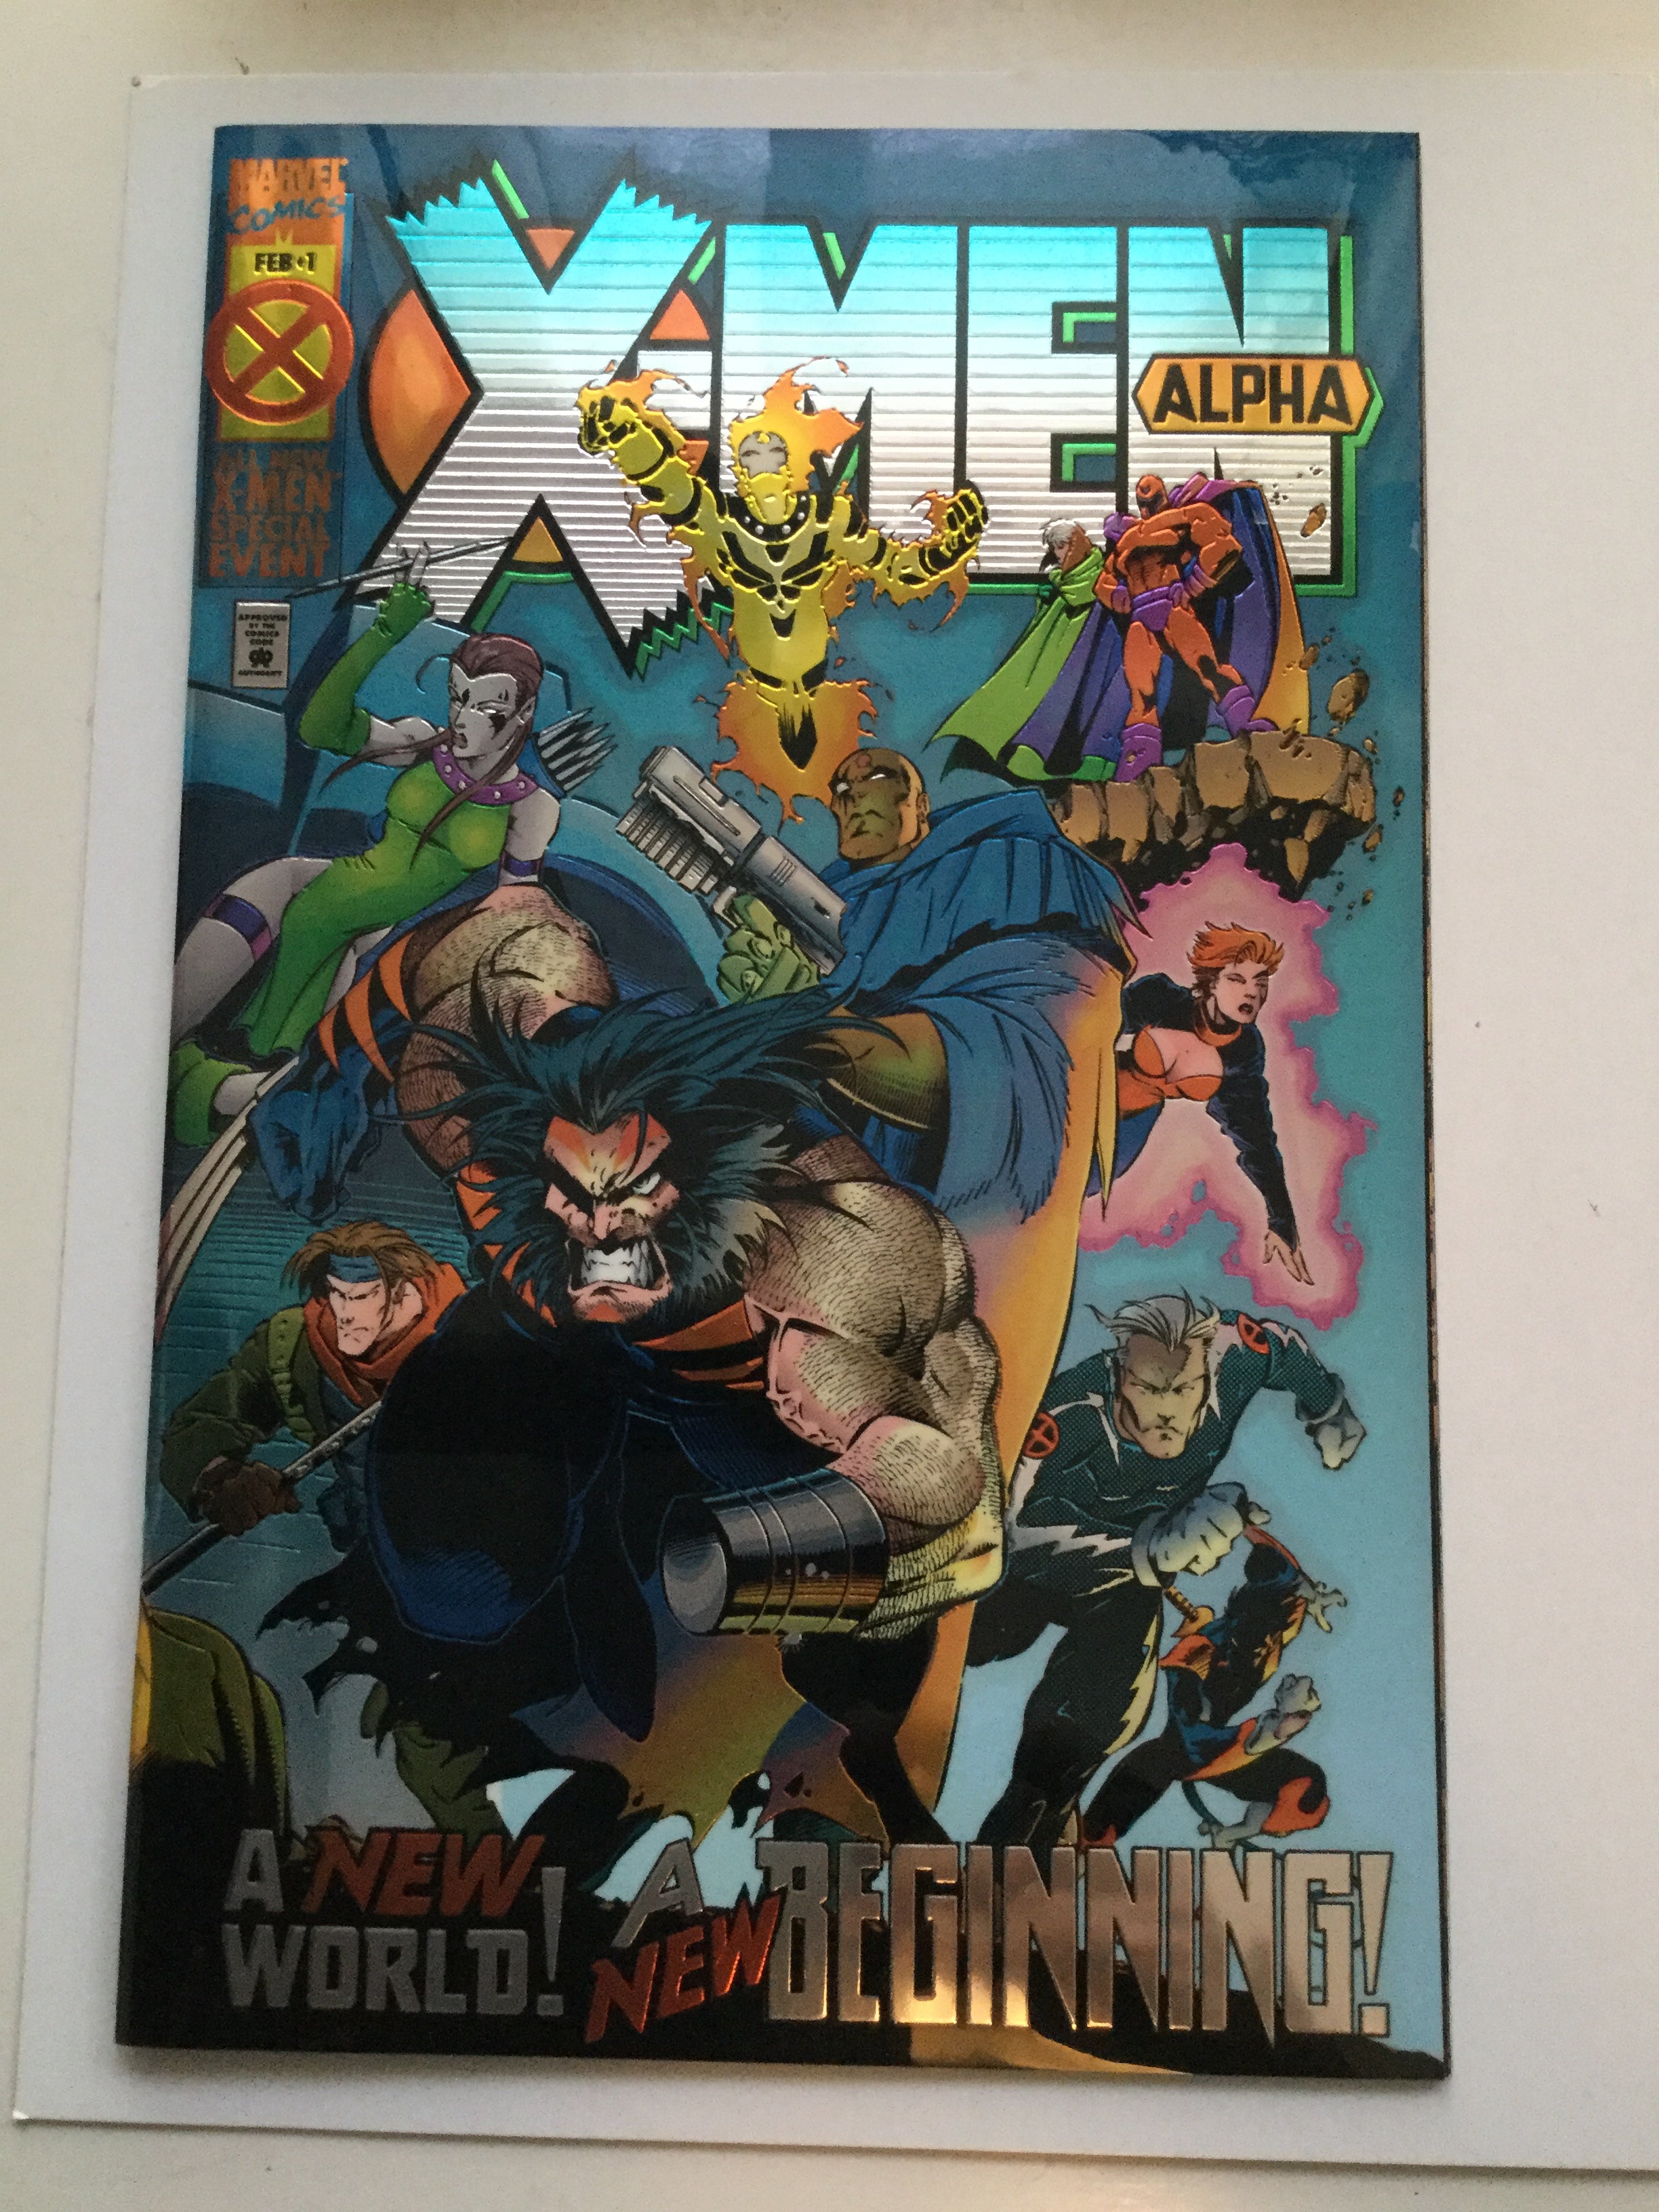 X-Men Alpha foil cover rare comic book